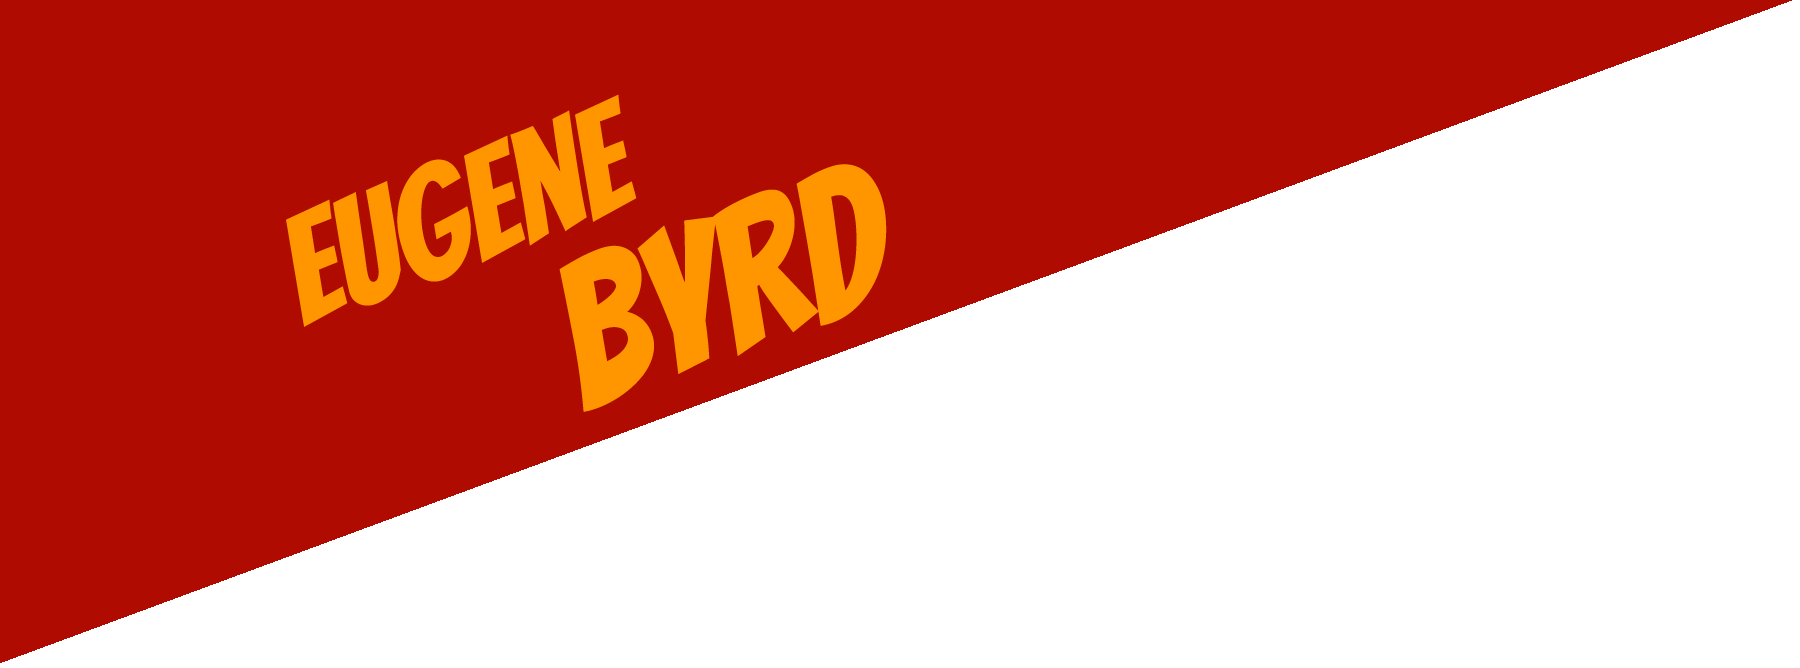 Eugene Byrd